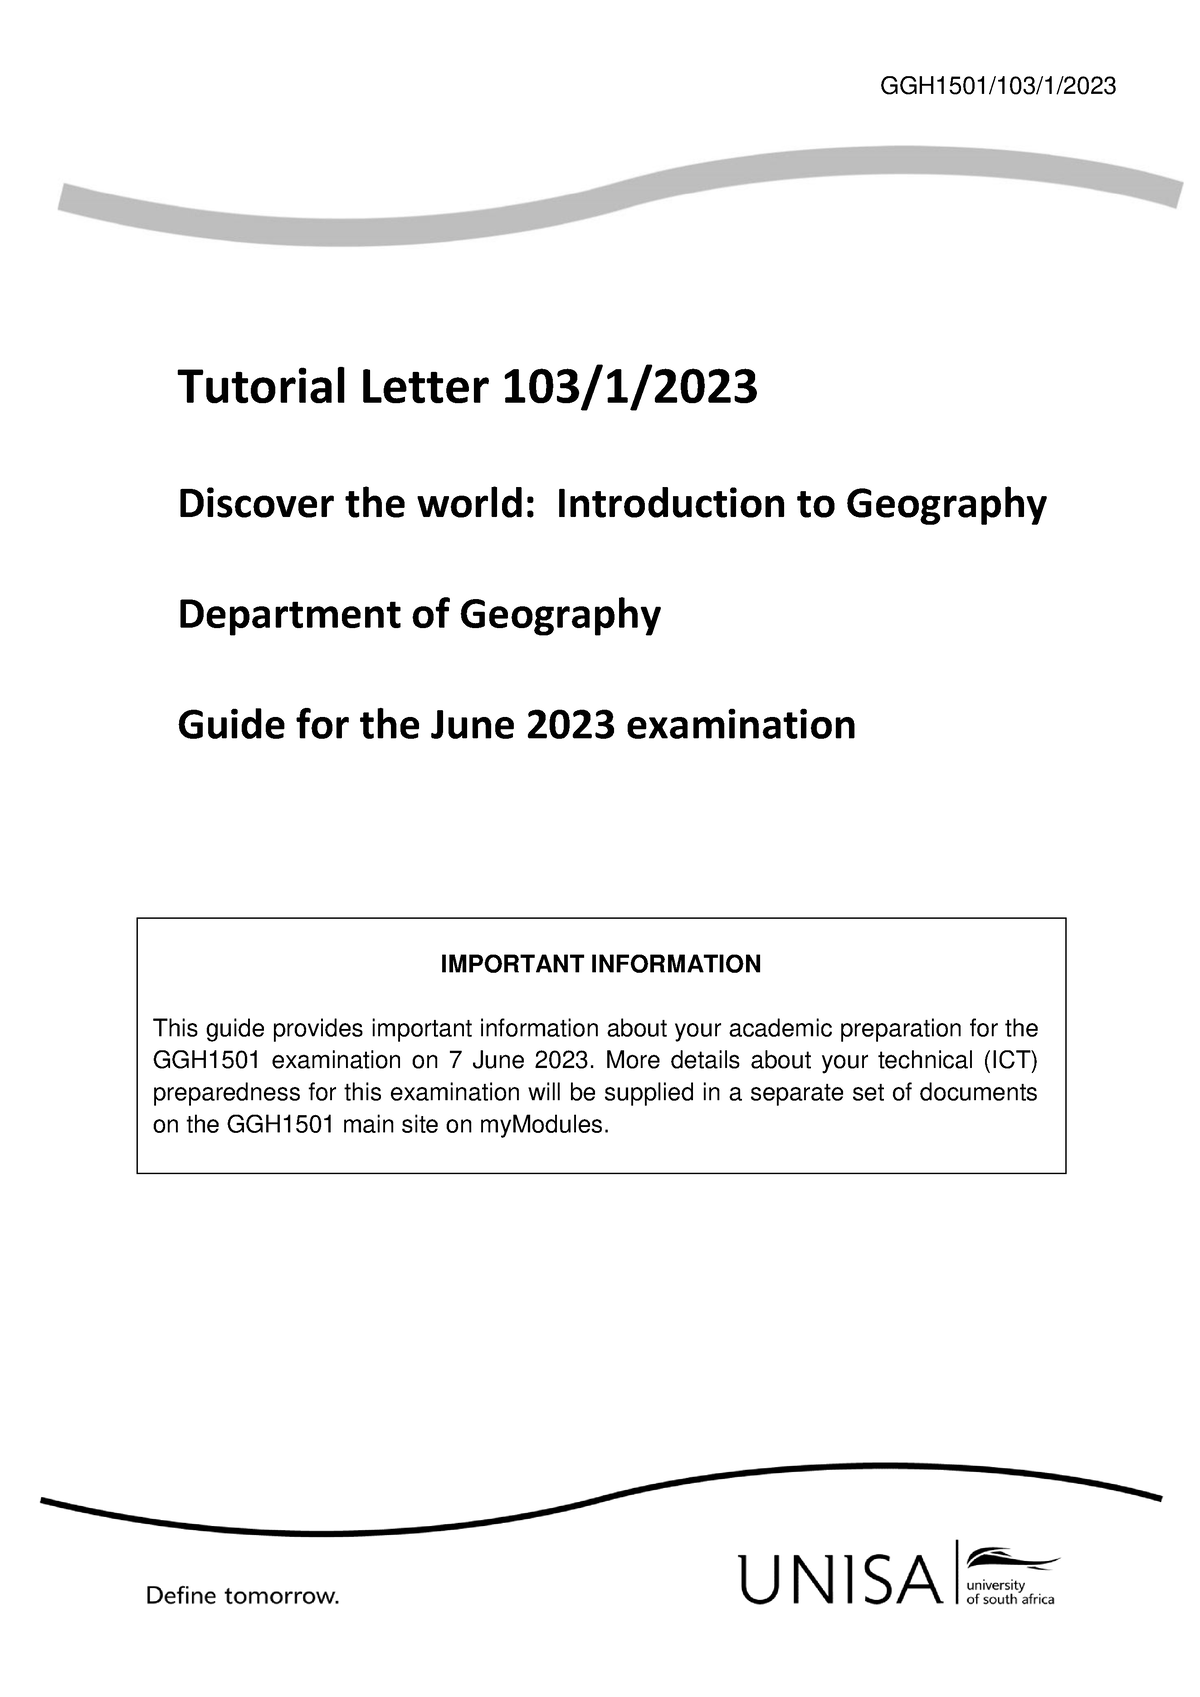 GGH1501 Academic Exam Guide June 2023 513b9d9555c5479c24545 d2123f17a79 ...